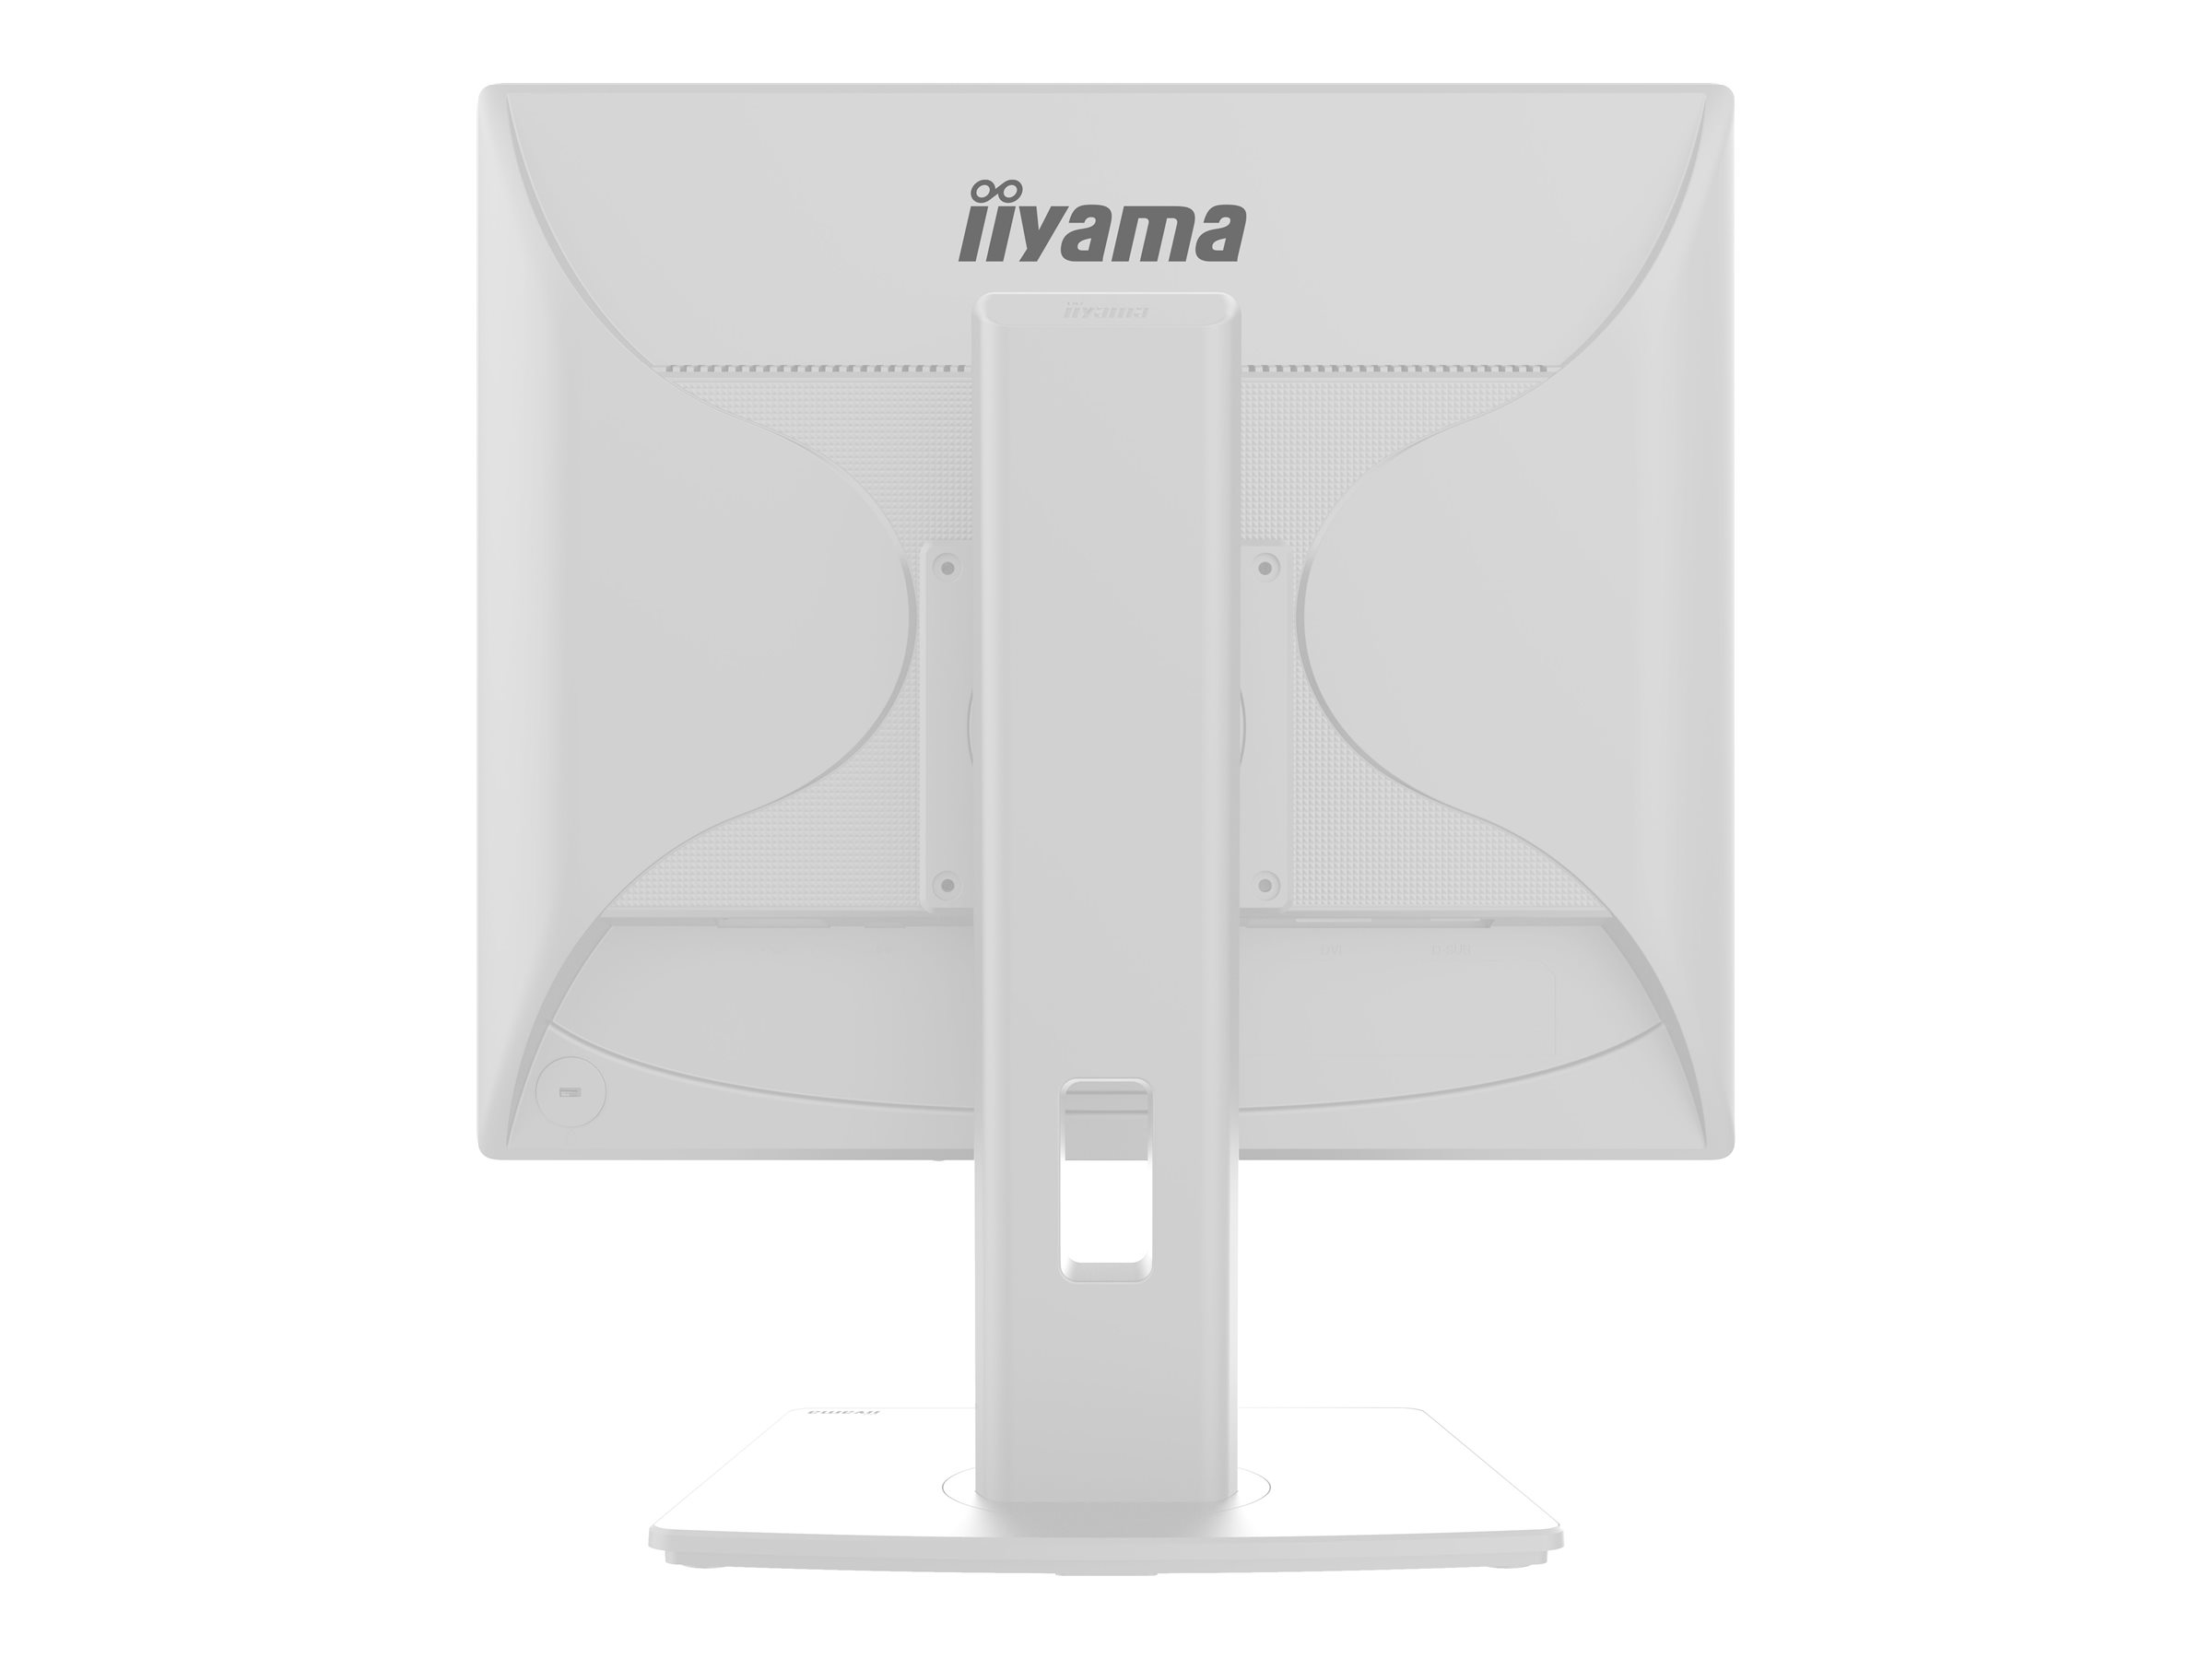 iiyama ProLite B1980D-W5 - Écran LED - 19" - 1280 x 1024 @ 60 Hz - TN - 250 cd/m² - 1000:1 - 5 ms - DVI, VGA - blanc mat - B1980D-W5 - Écrans d'ordinateur